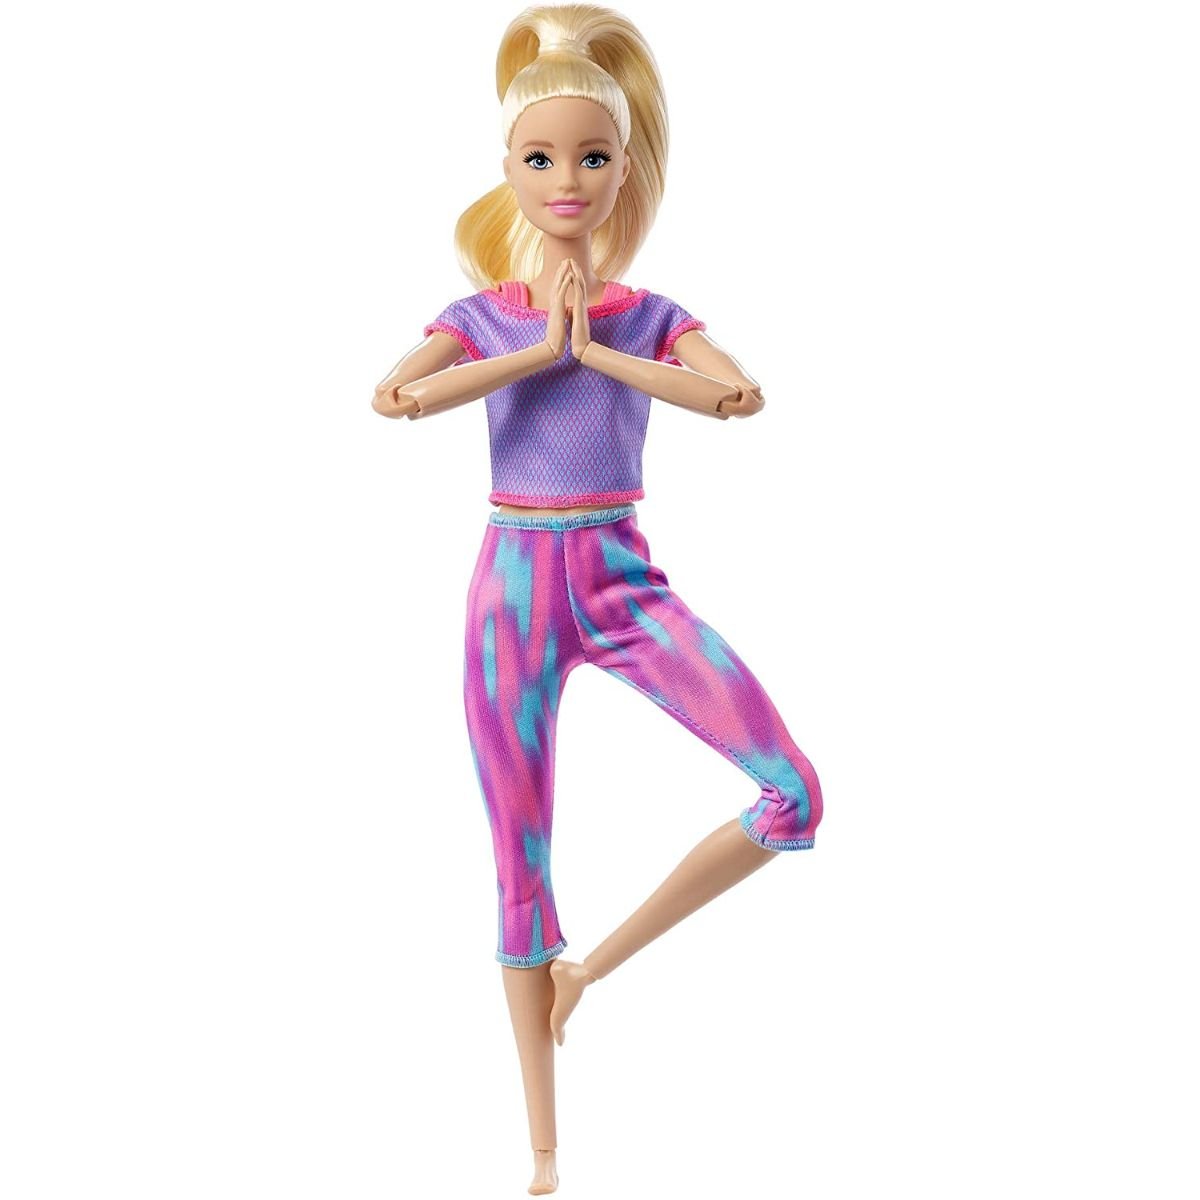 Papusa Barbie, Made to move, GXF04 Barbie